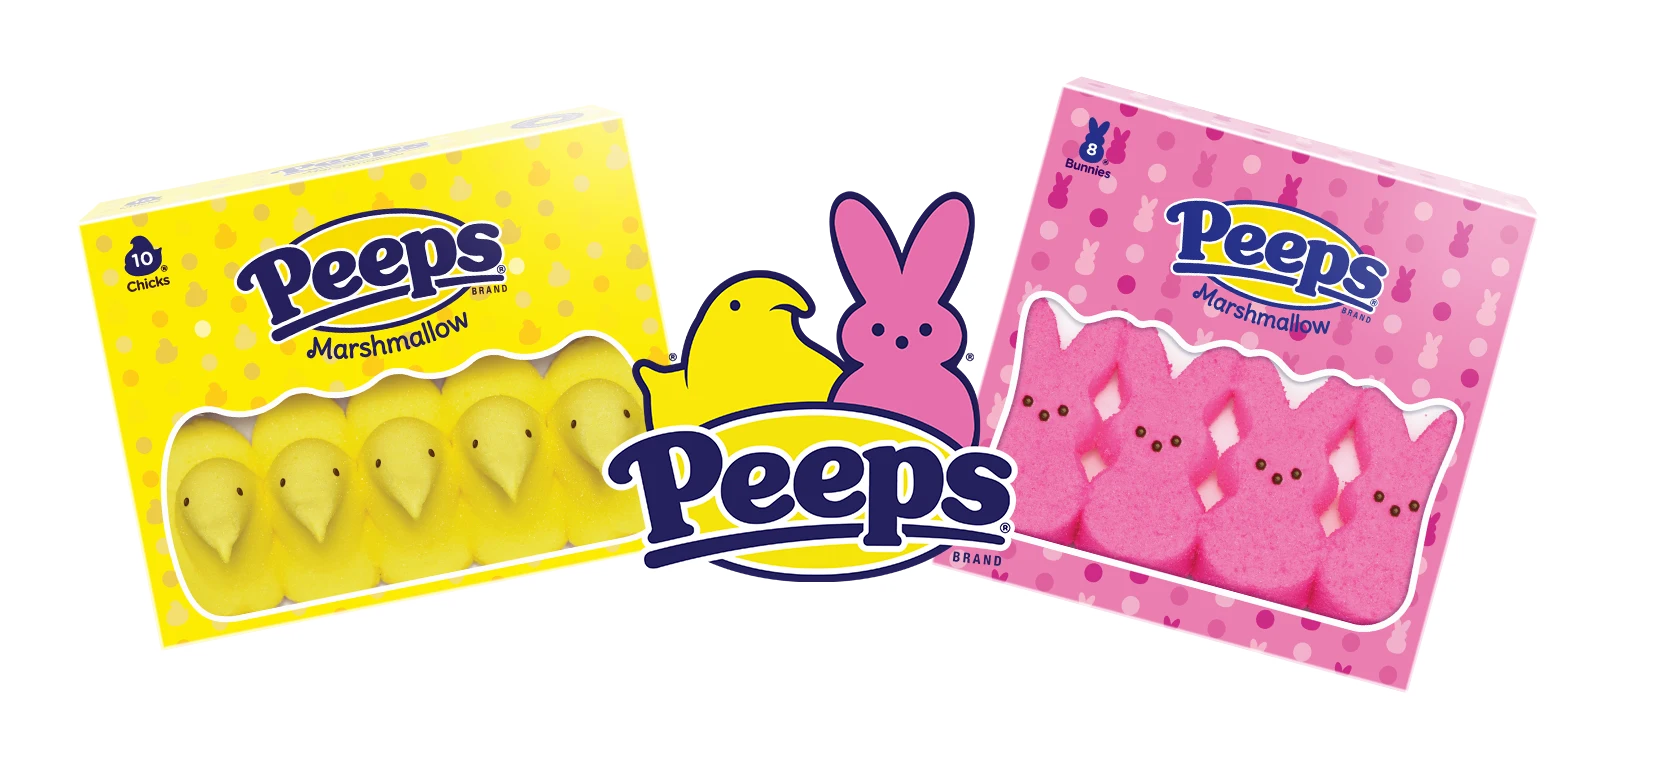 Two boxes of PEEPS aside the PEEPS logo